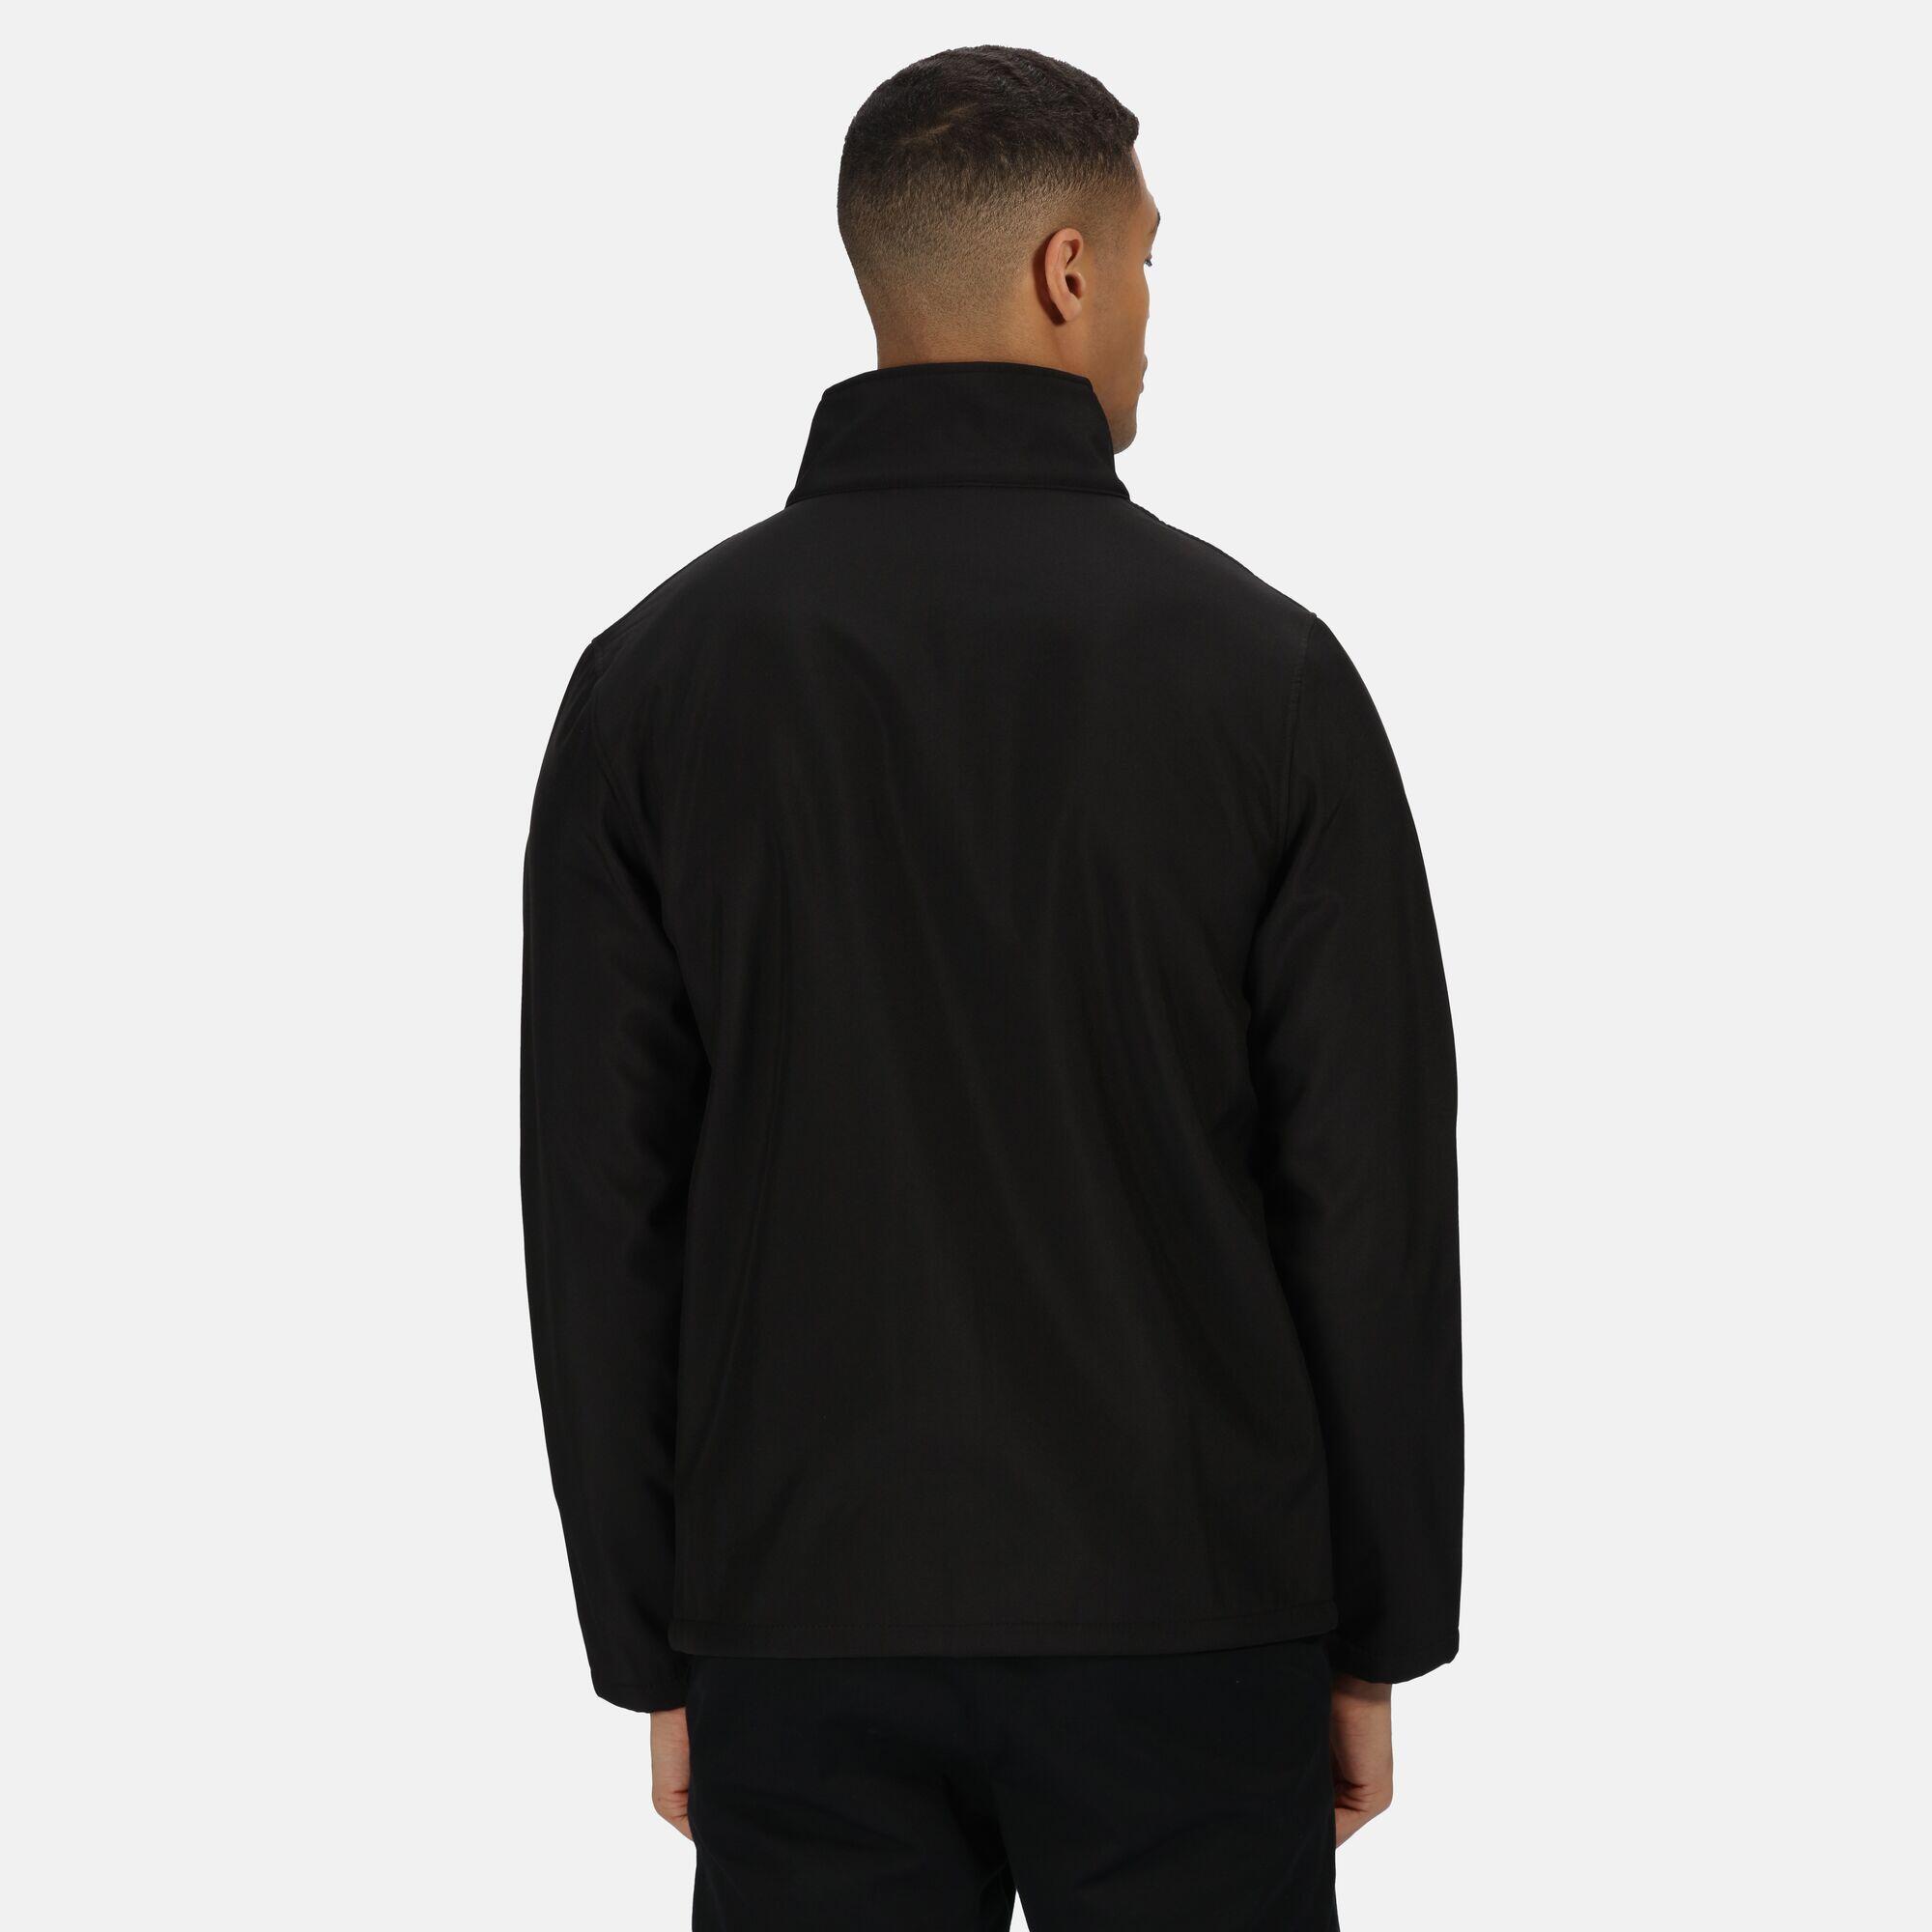 Mens Ablaze Printable Softshell Jacket (Black/Black) 4/5